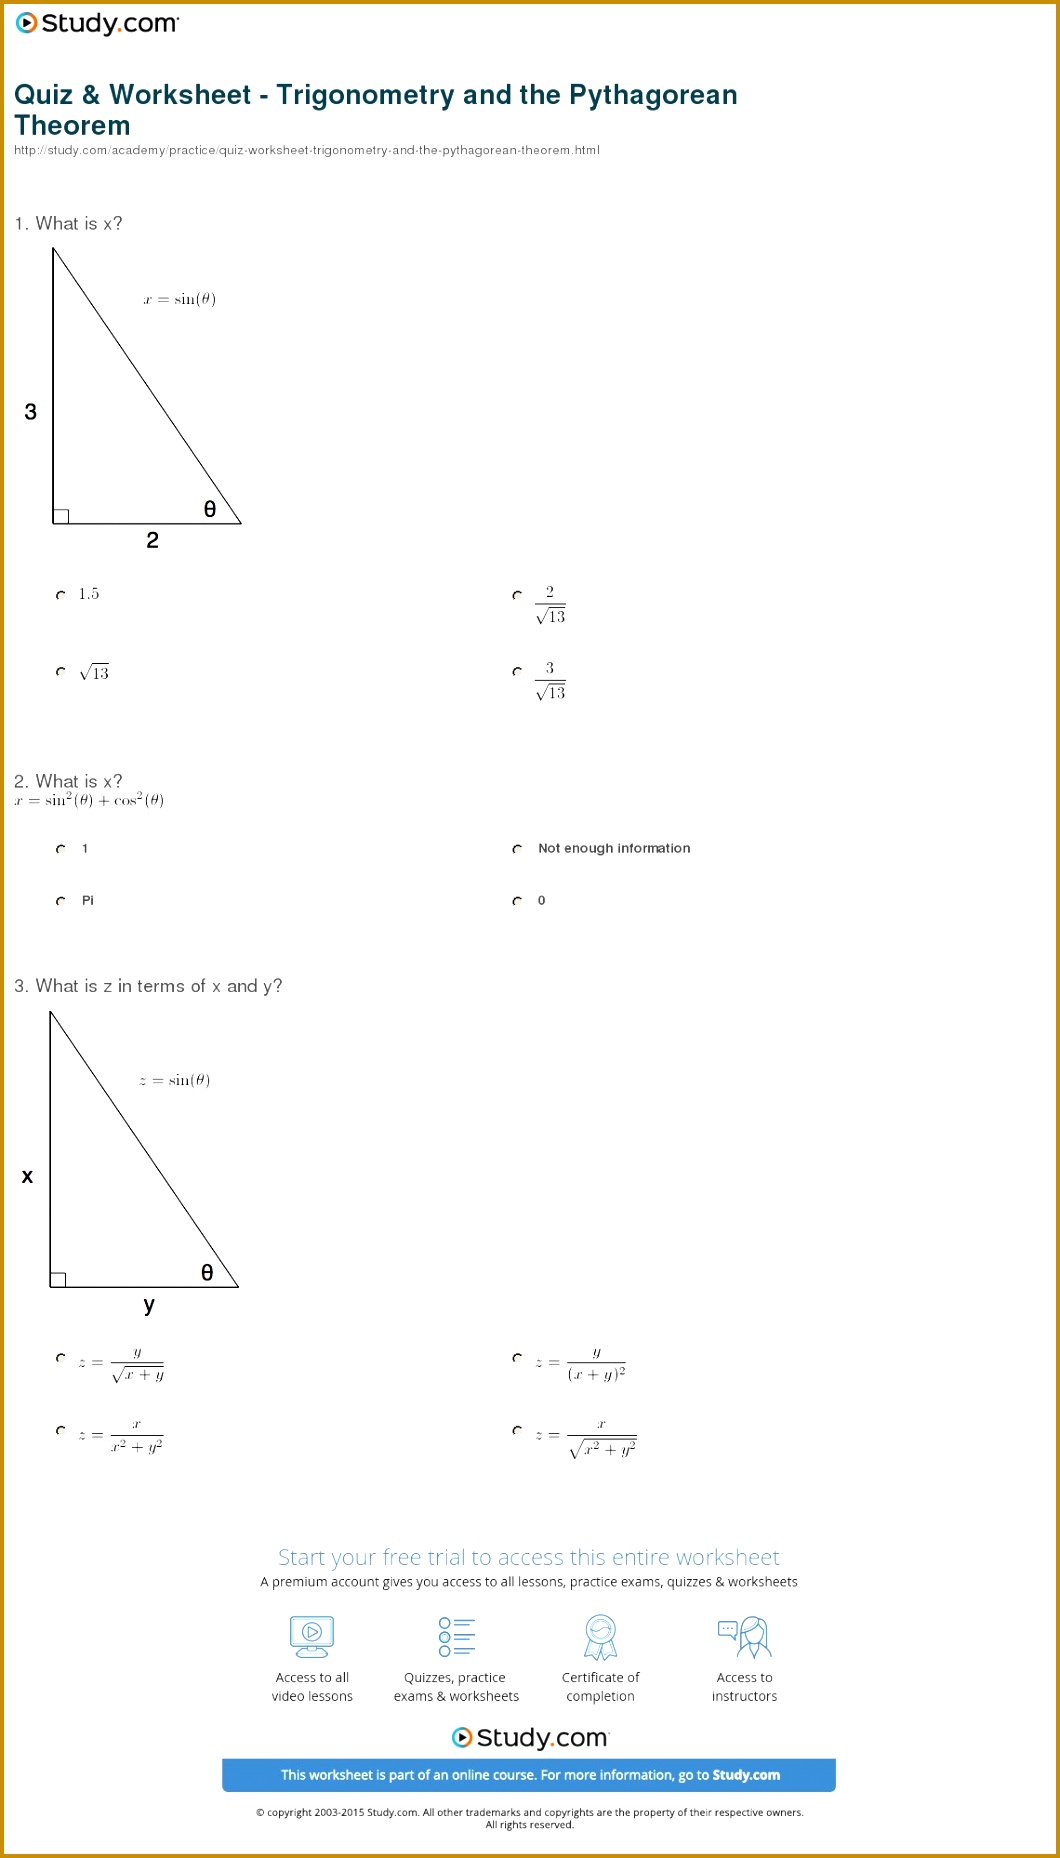 Print Trigonometry and the Pythagorean Theorem Worksheet 18581060